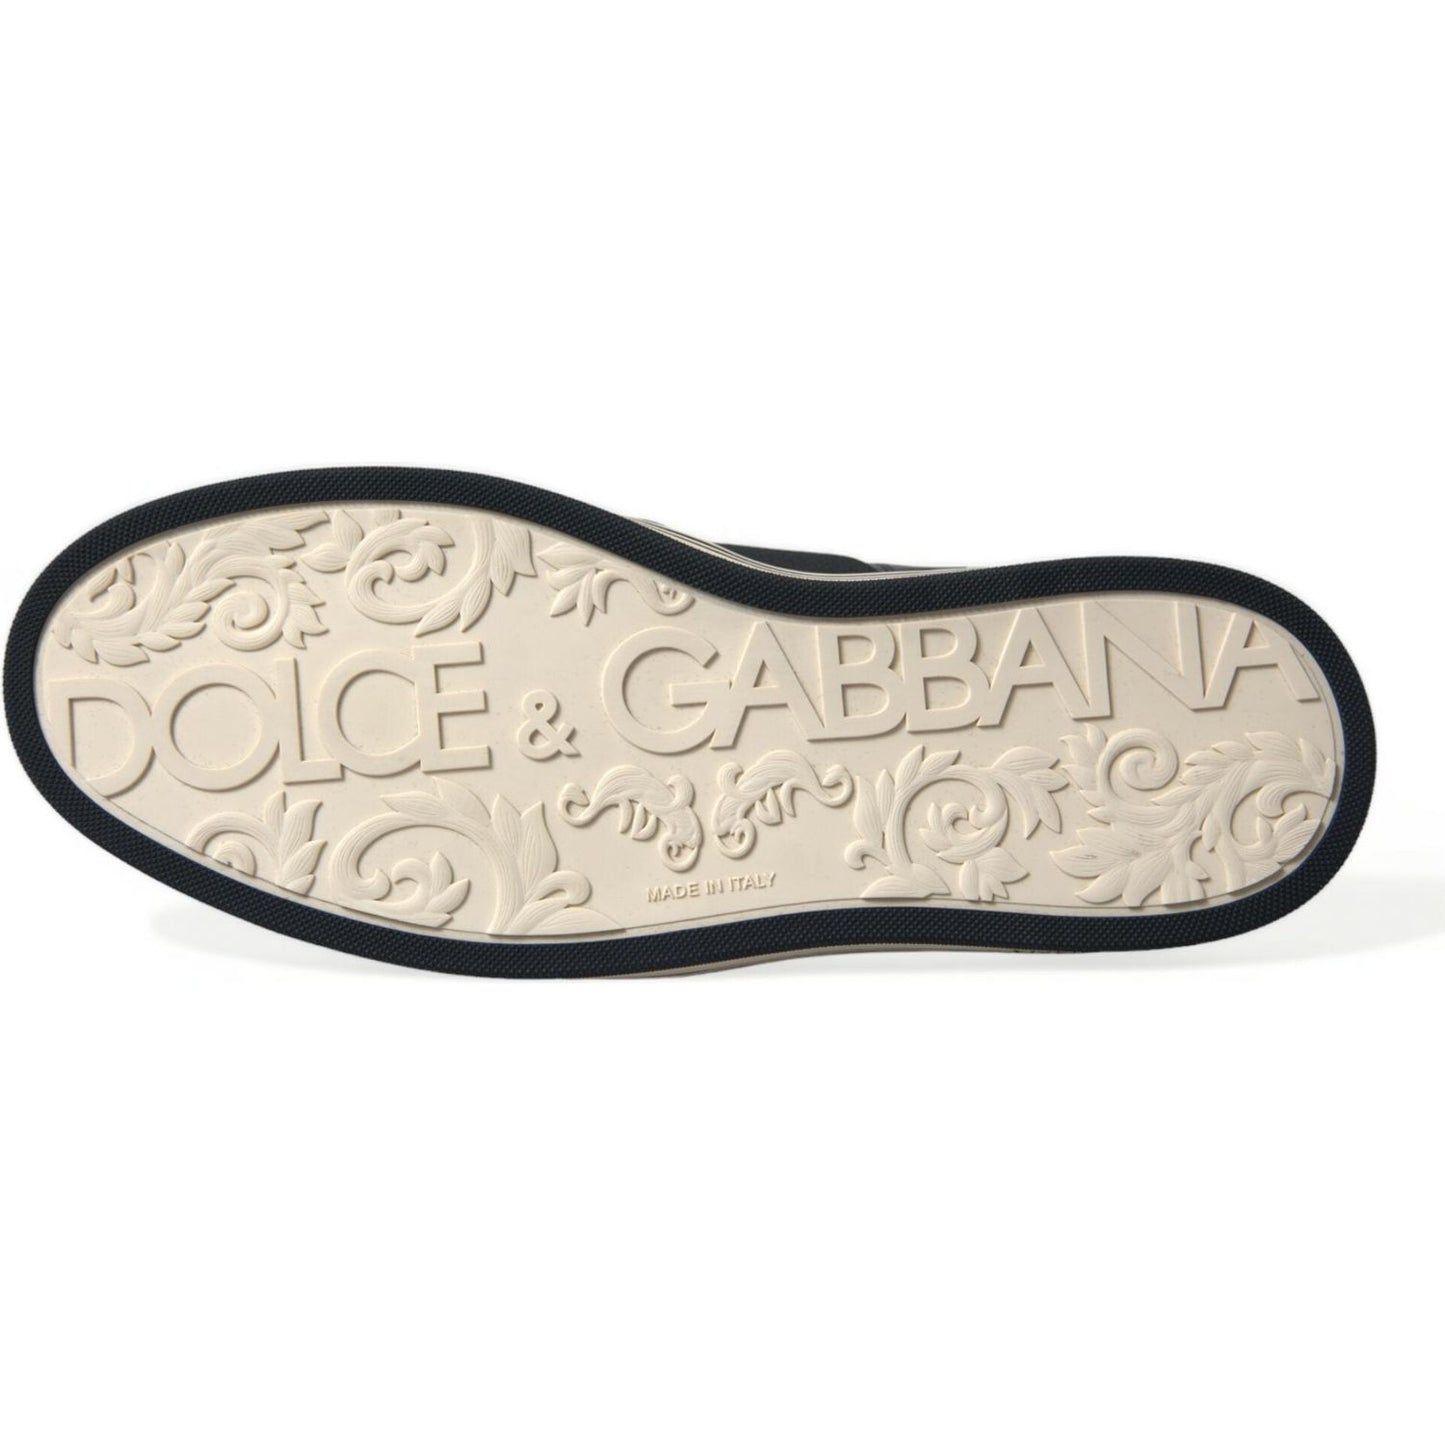 Dolce & GabbanaElegant Crocodile Leather Low-Top SneakersMcRichard Designer Brands£1219.00